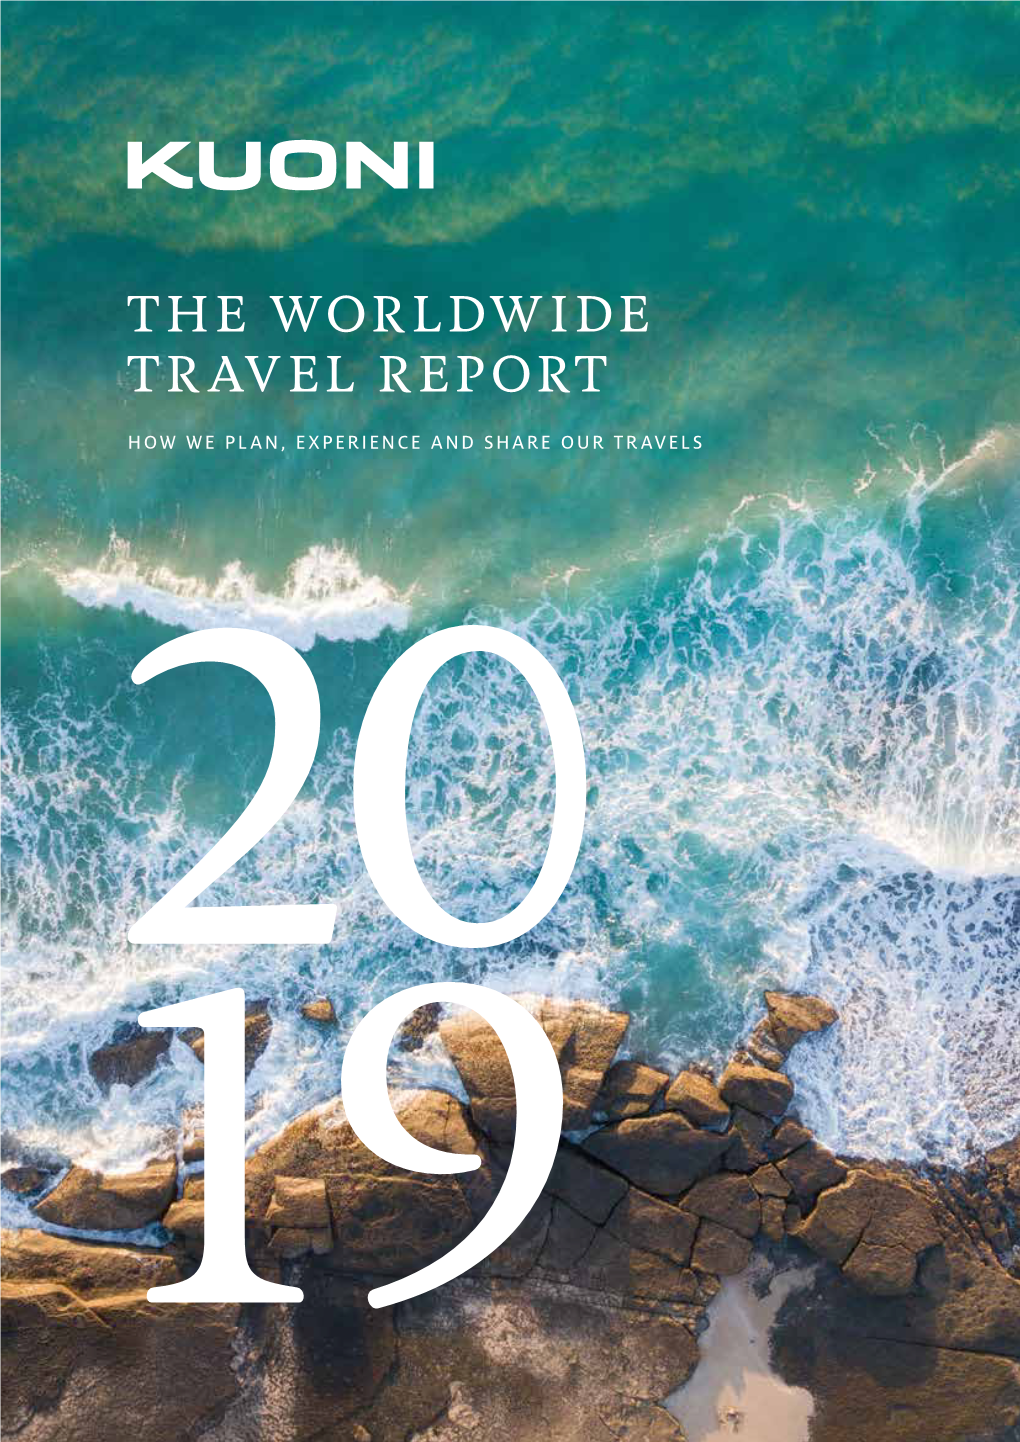 The Worldwide Travel Report 2019